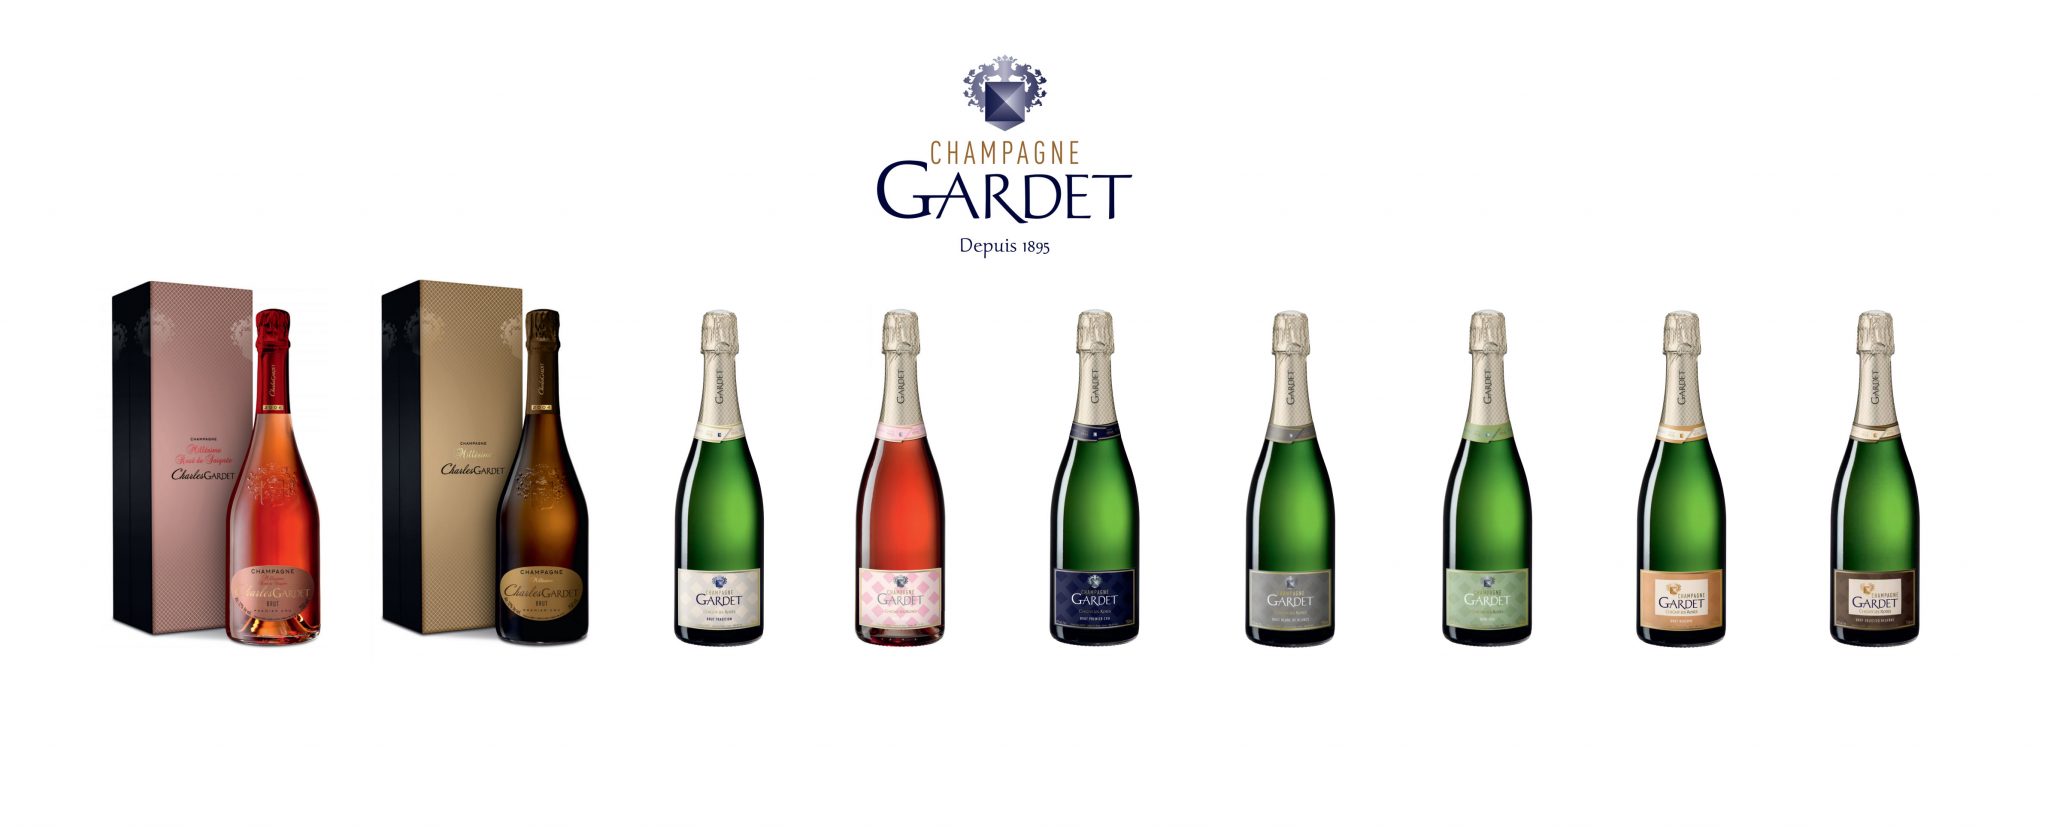 Champagne Charles Gardet